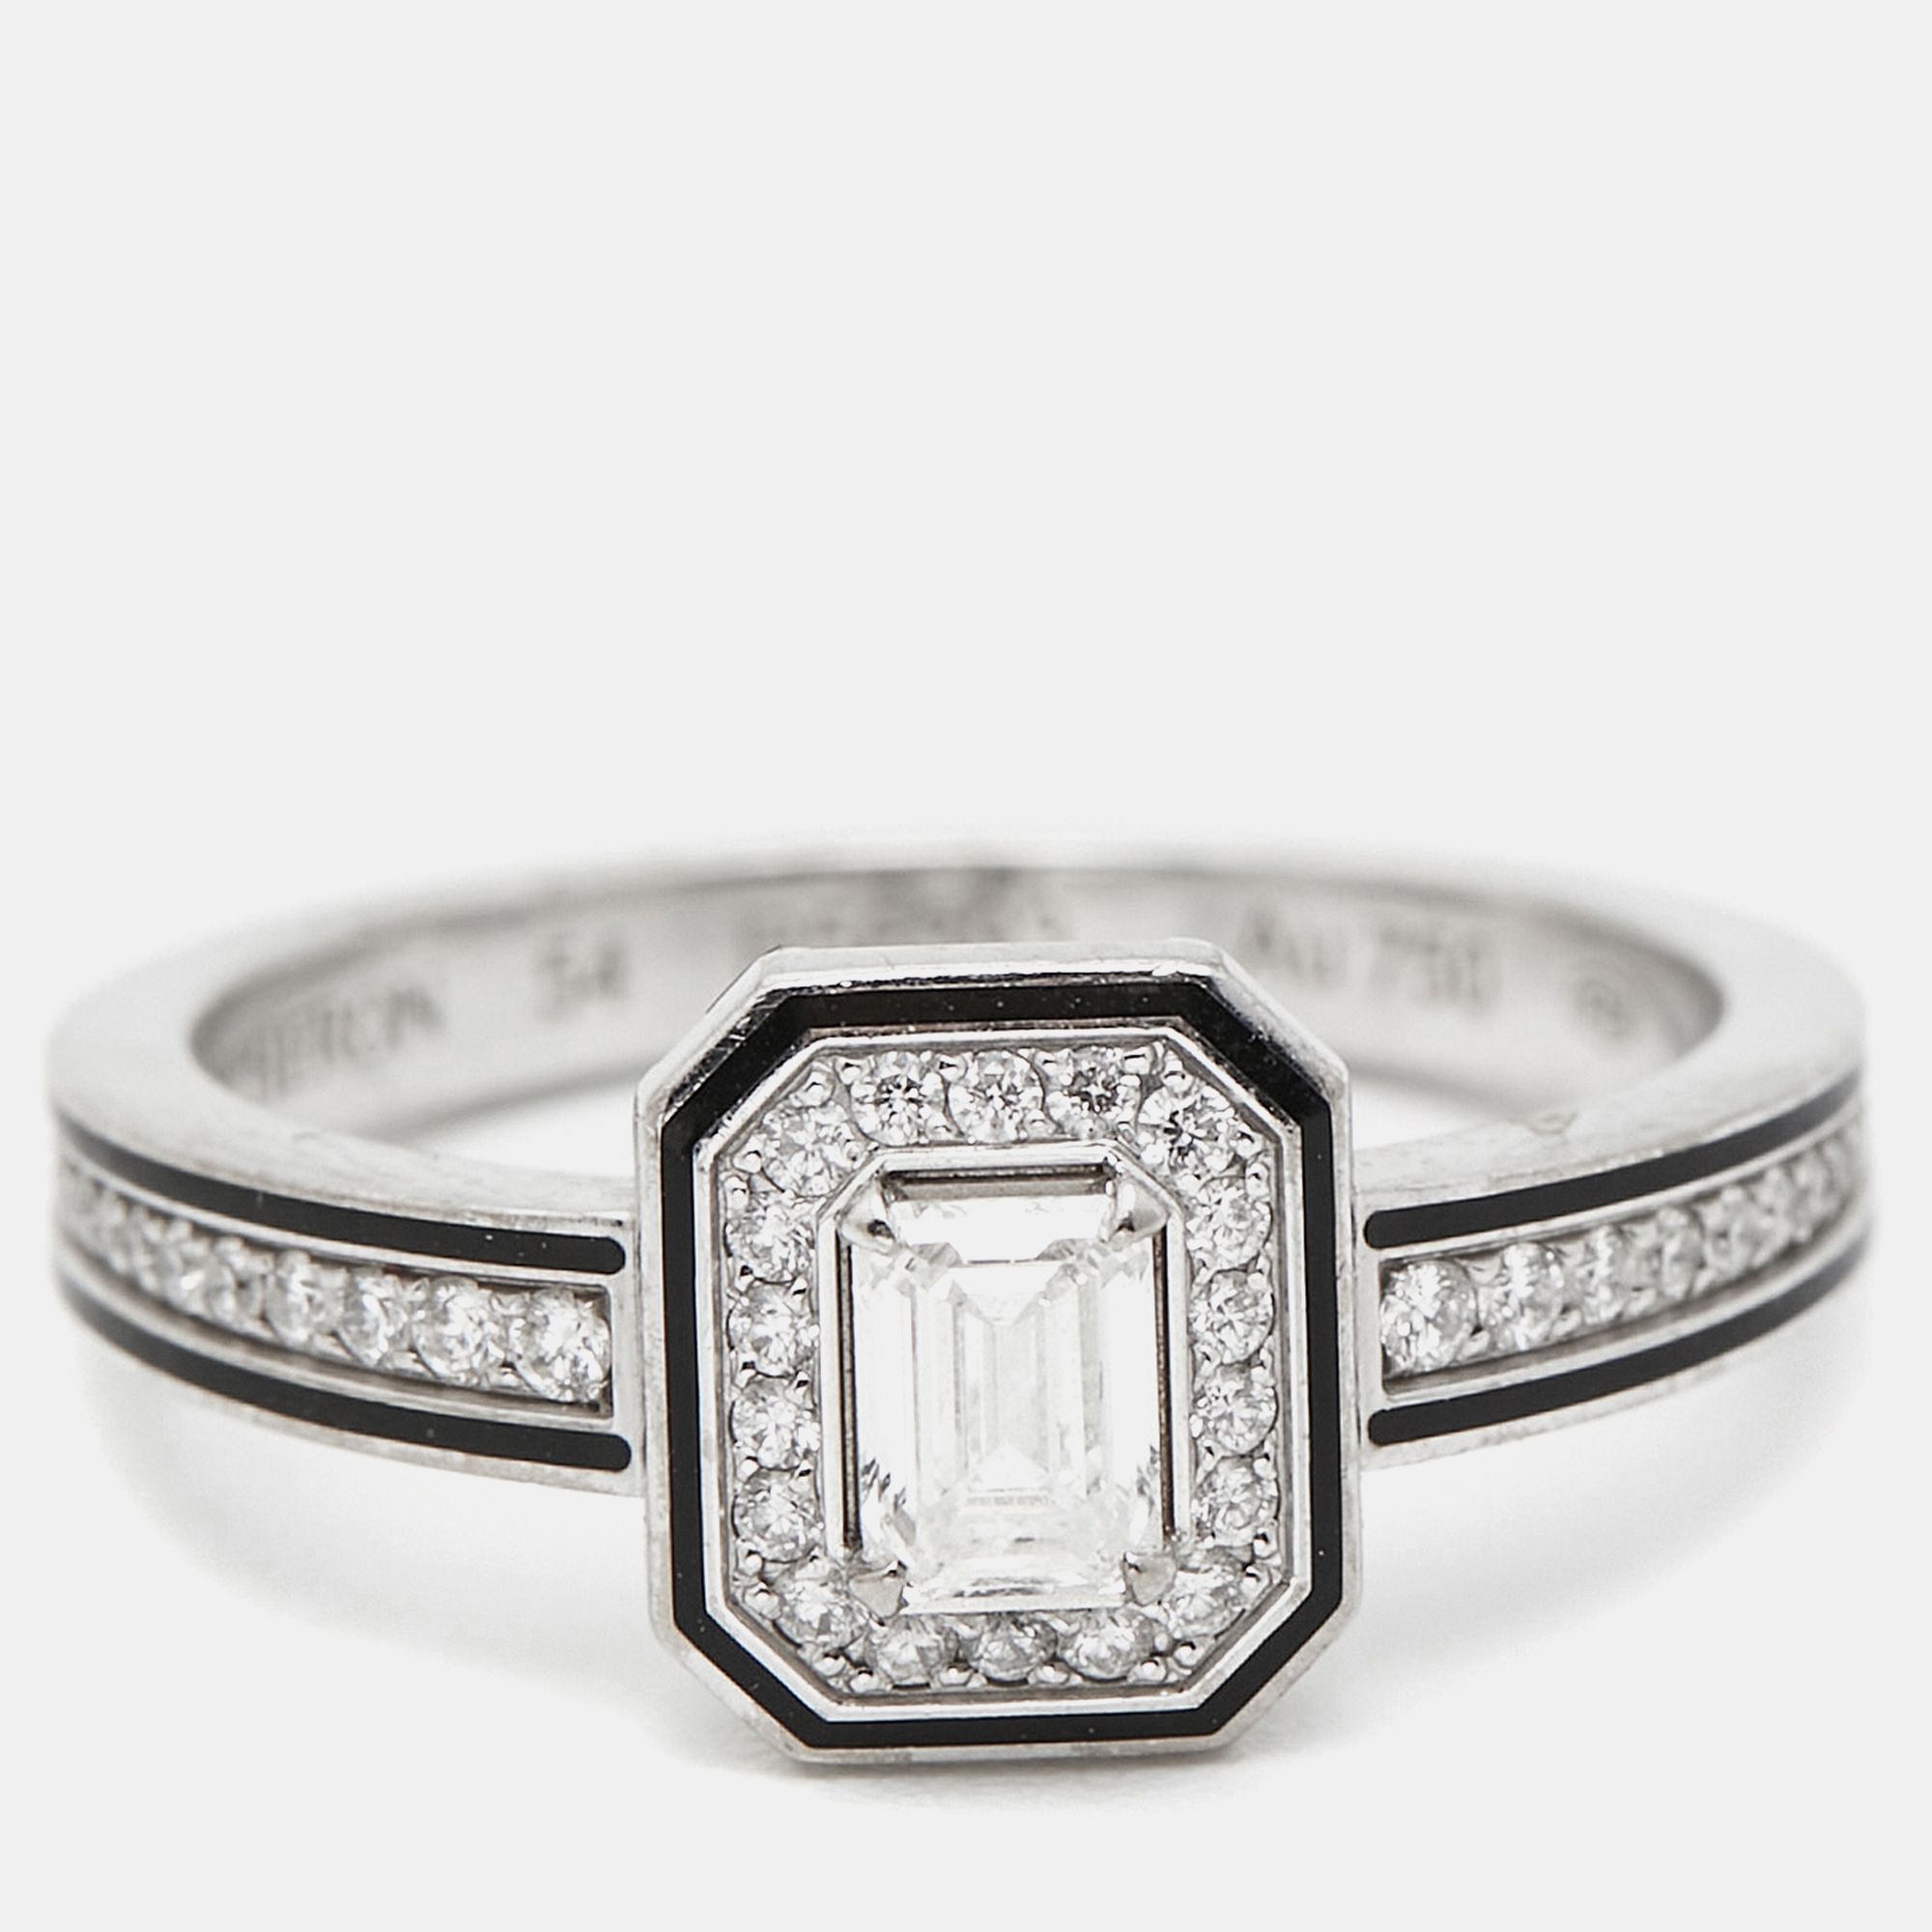  Boucheron Vendôme liseré Diamonds Black Lacquer 18k White Gold Ring Size 54